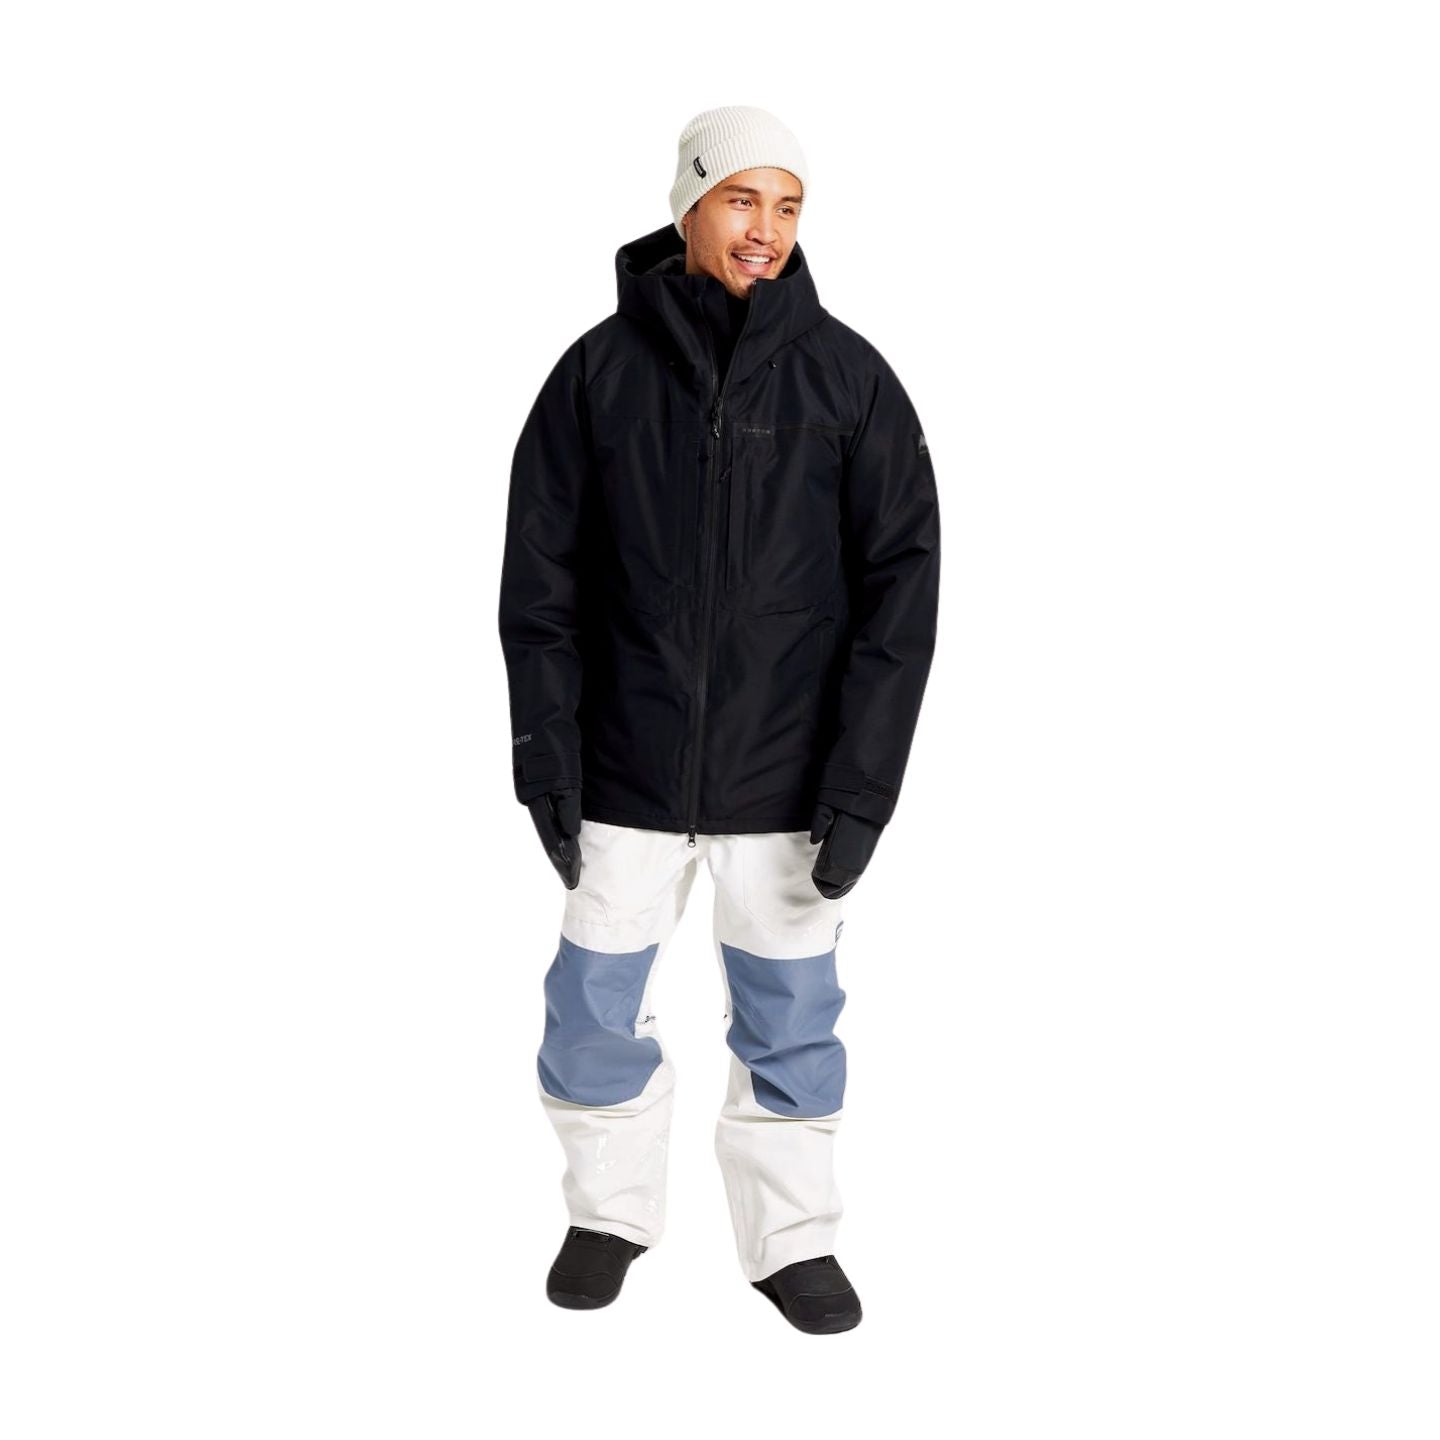 Men's Burton Pillowline GORE-TEX 2L Jacket